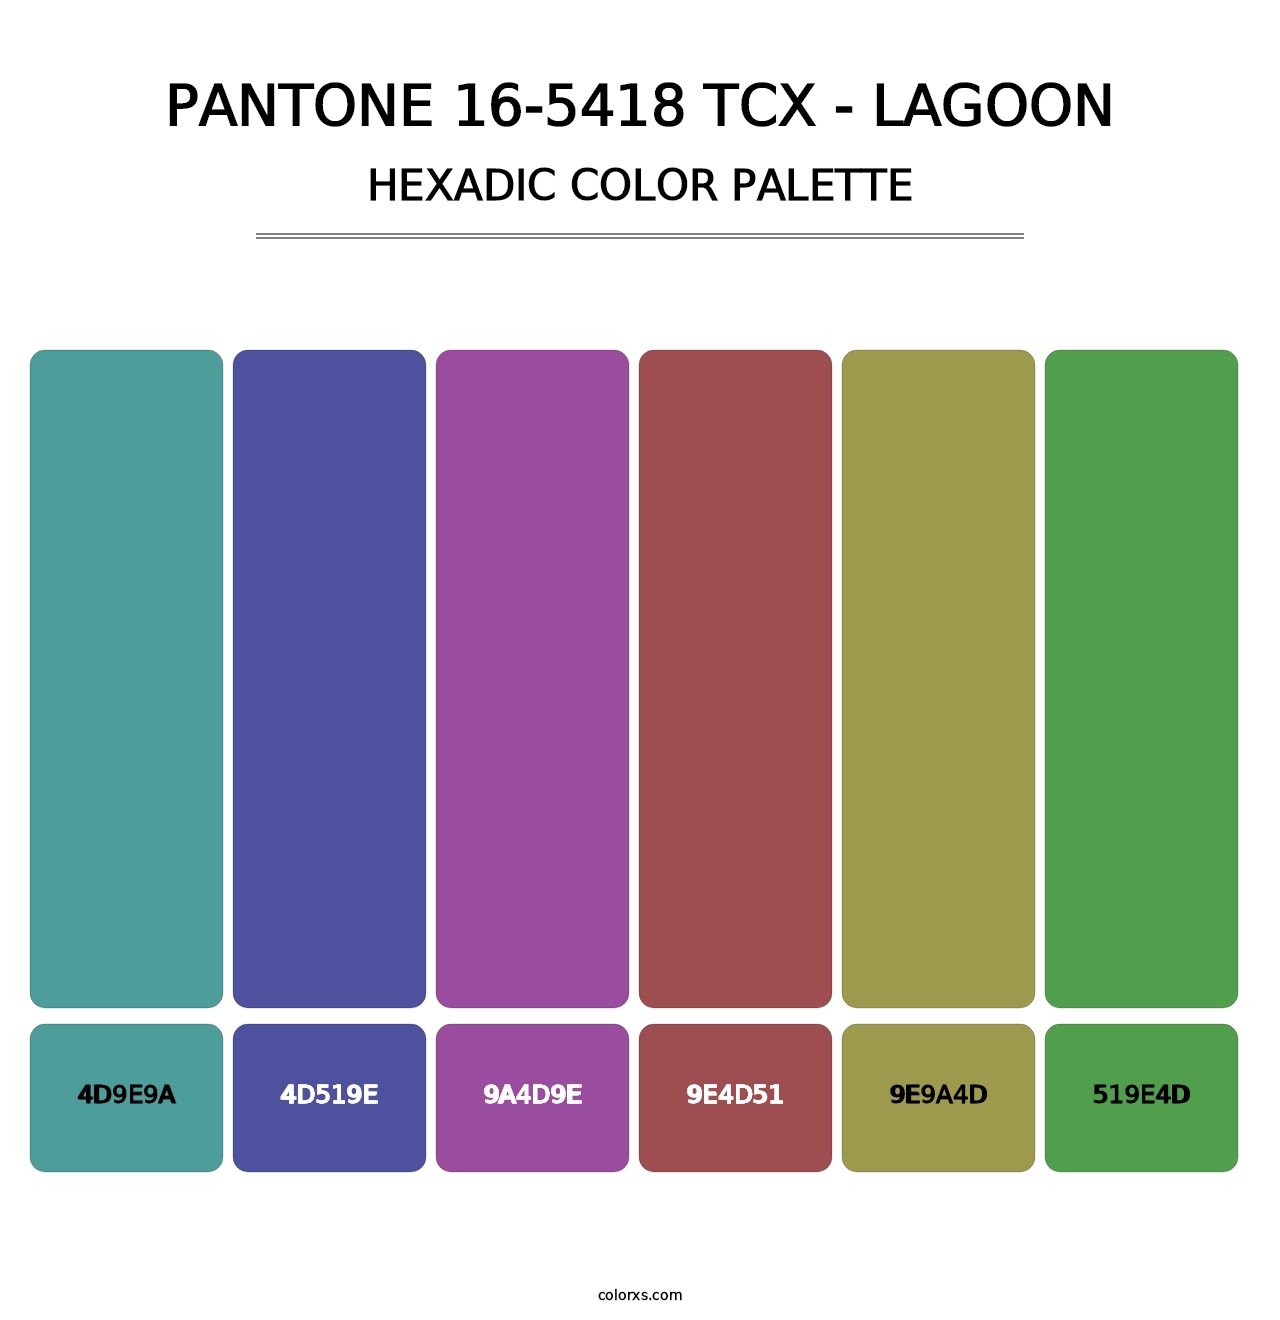 PANTONE 16-5418 TCX - Lagoon - Hexadic Color Palette